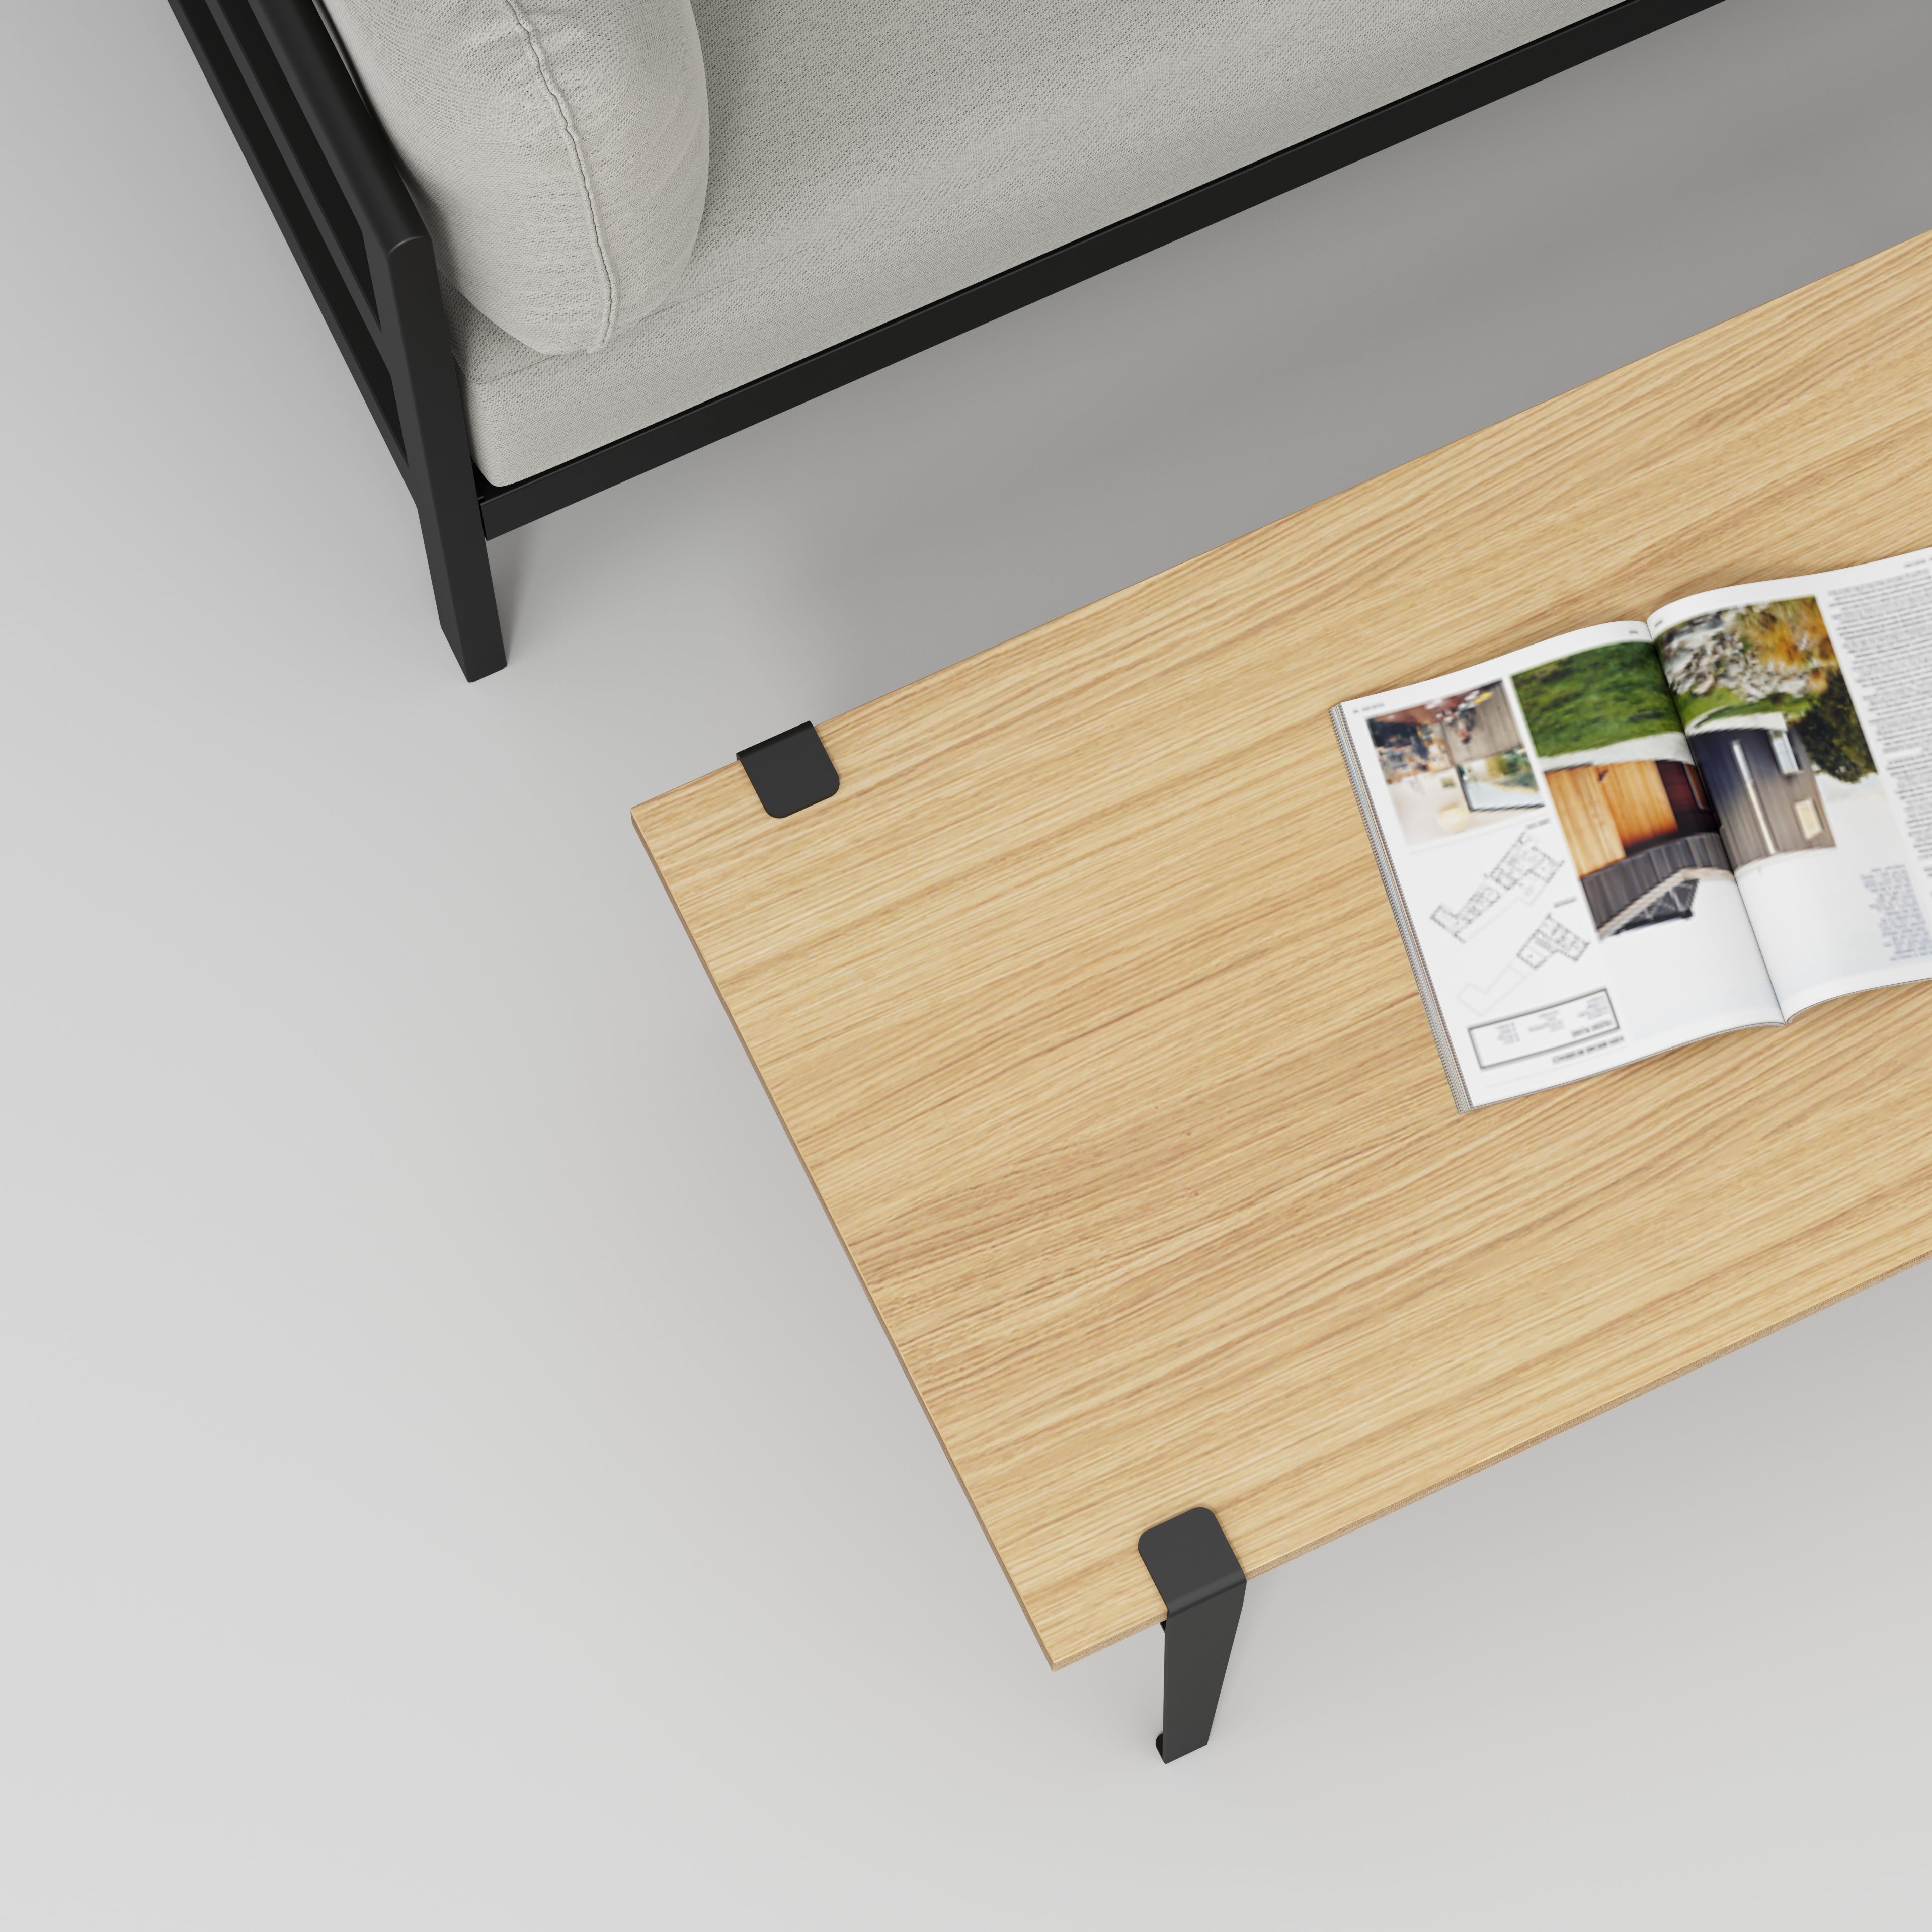 Coffee Table with Black Tiptoe Legs - Plywood Oak - 1200(w) x 600(d) x 430(h)